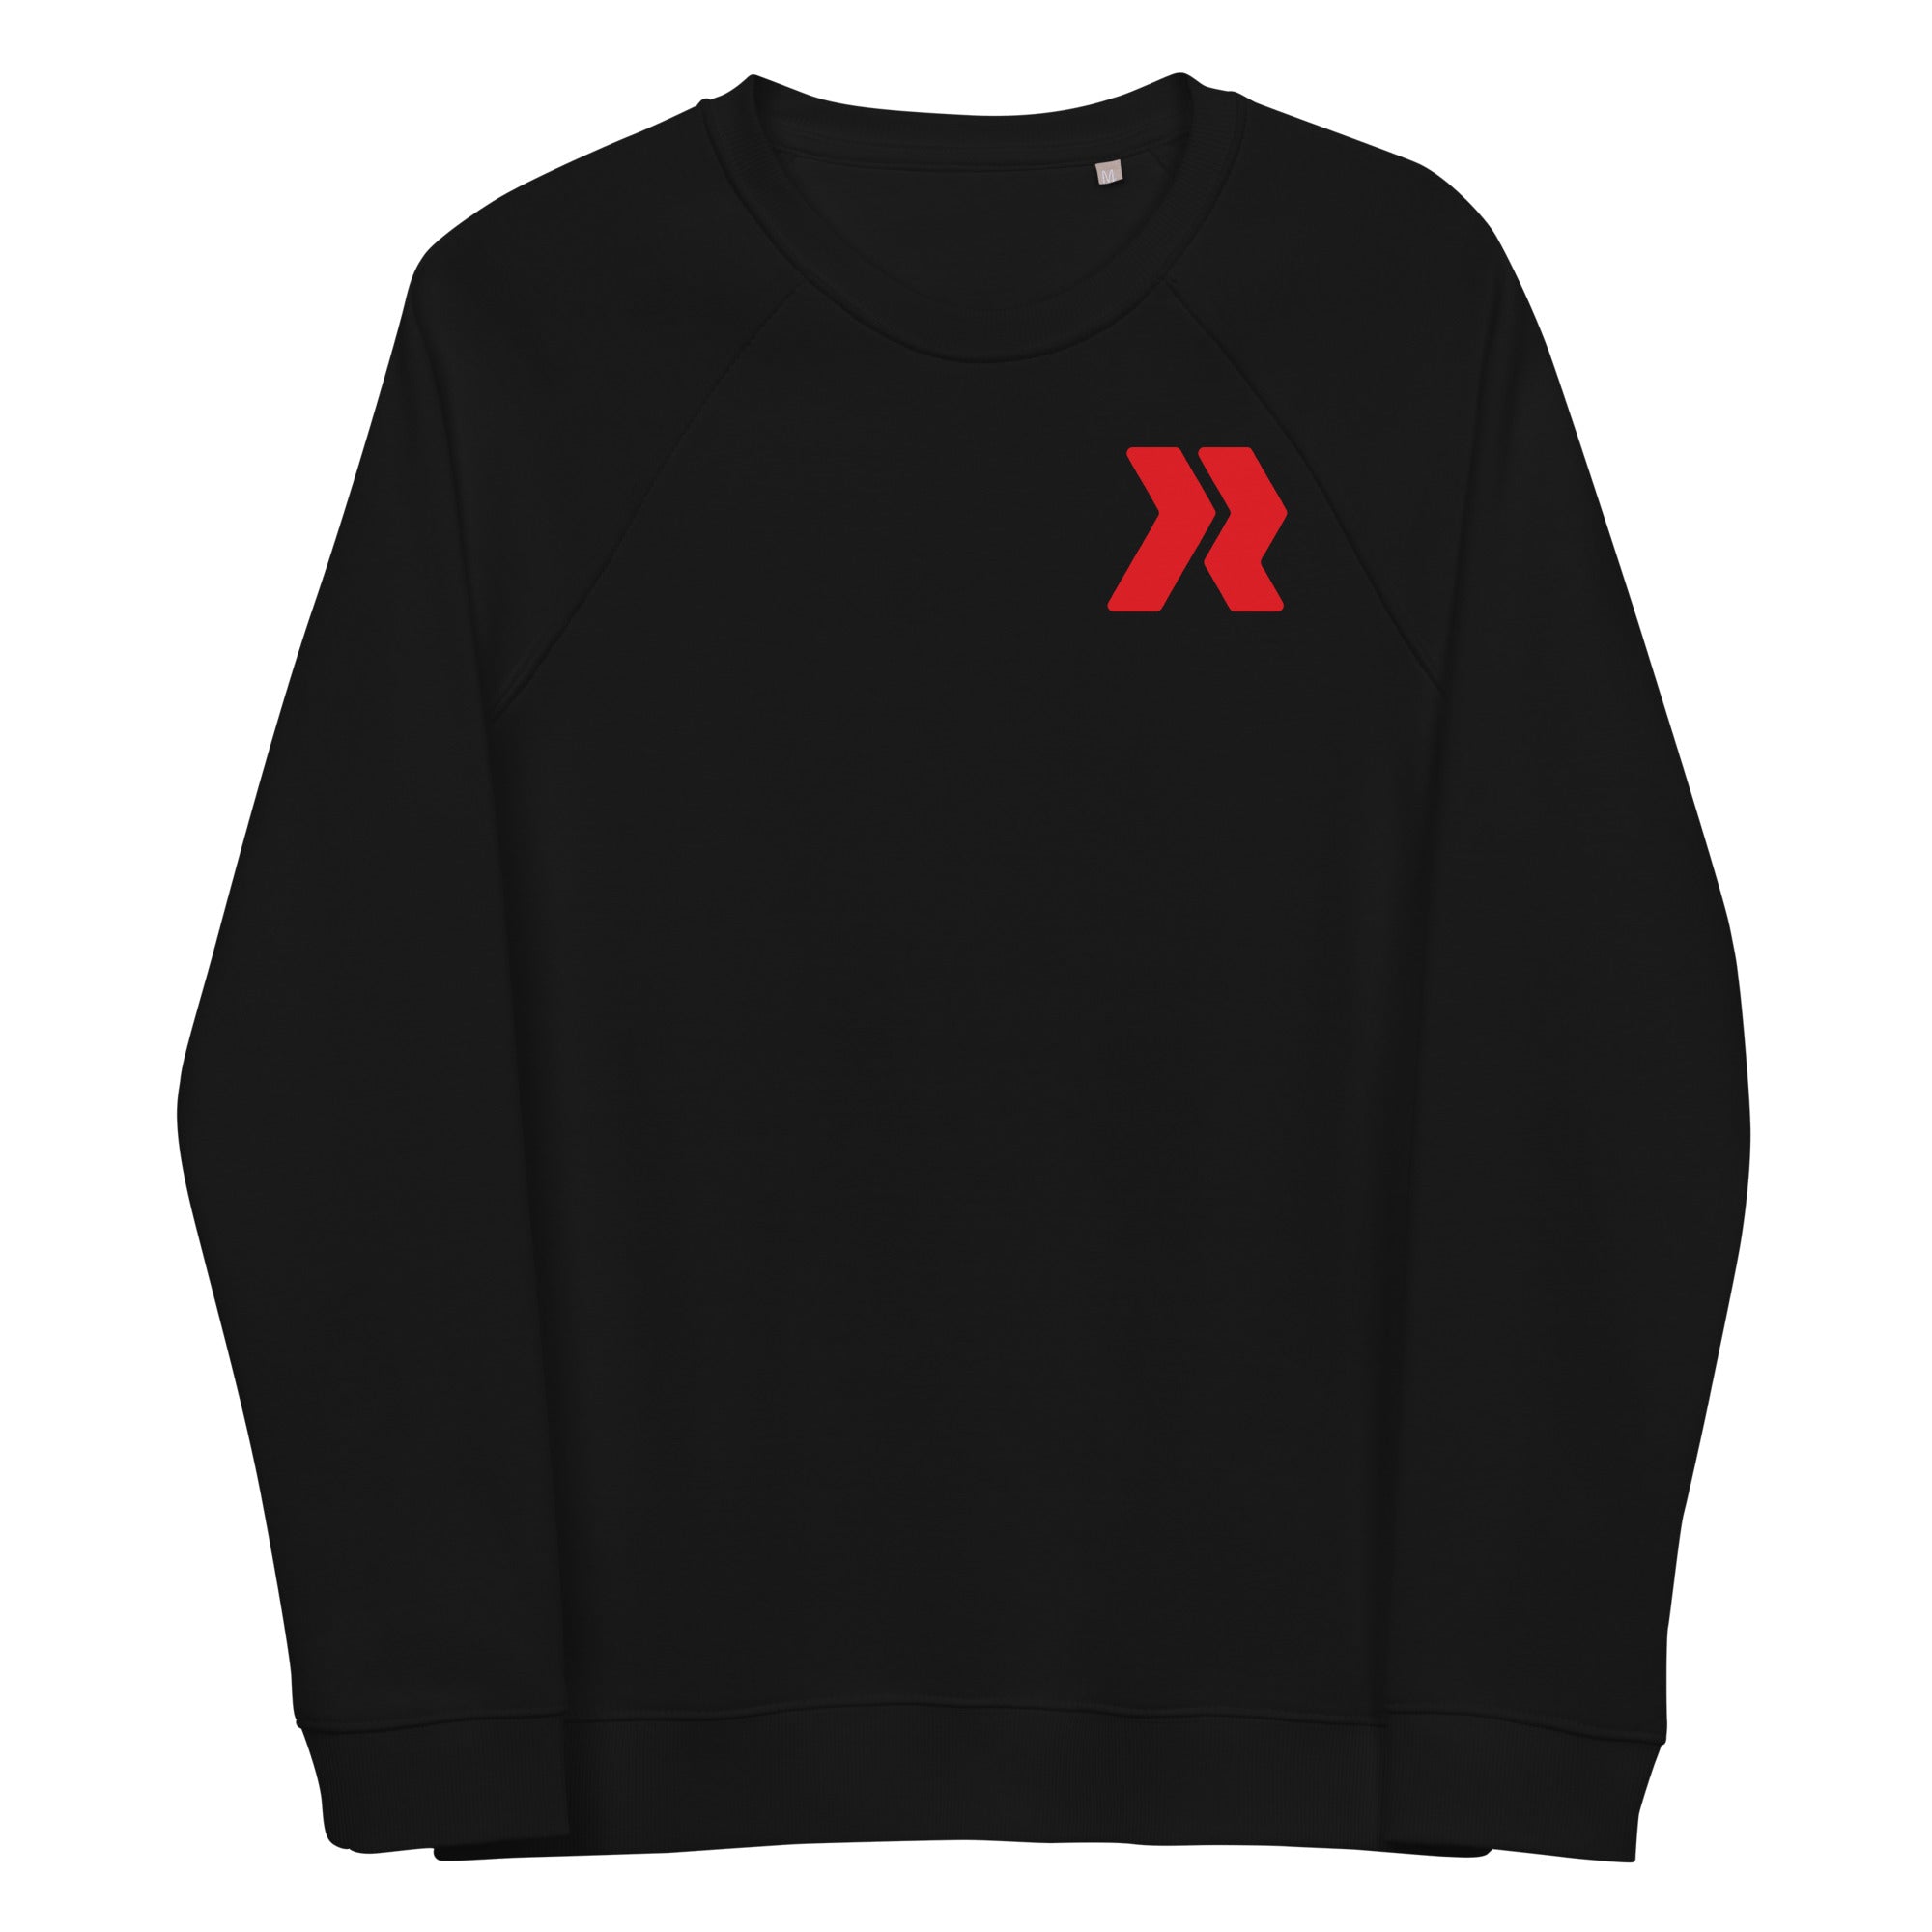 Montgomeryville Logo R - R/W - Black Unisex organic raglan sweatshirt